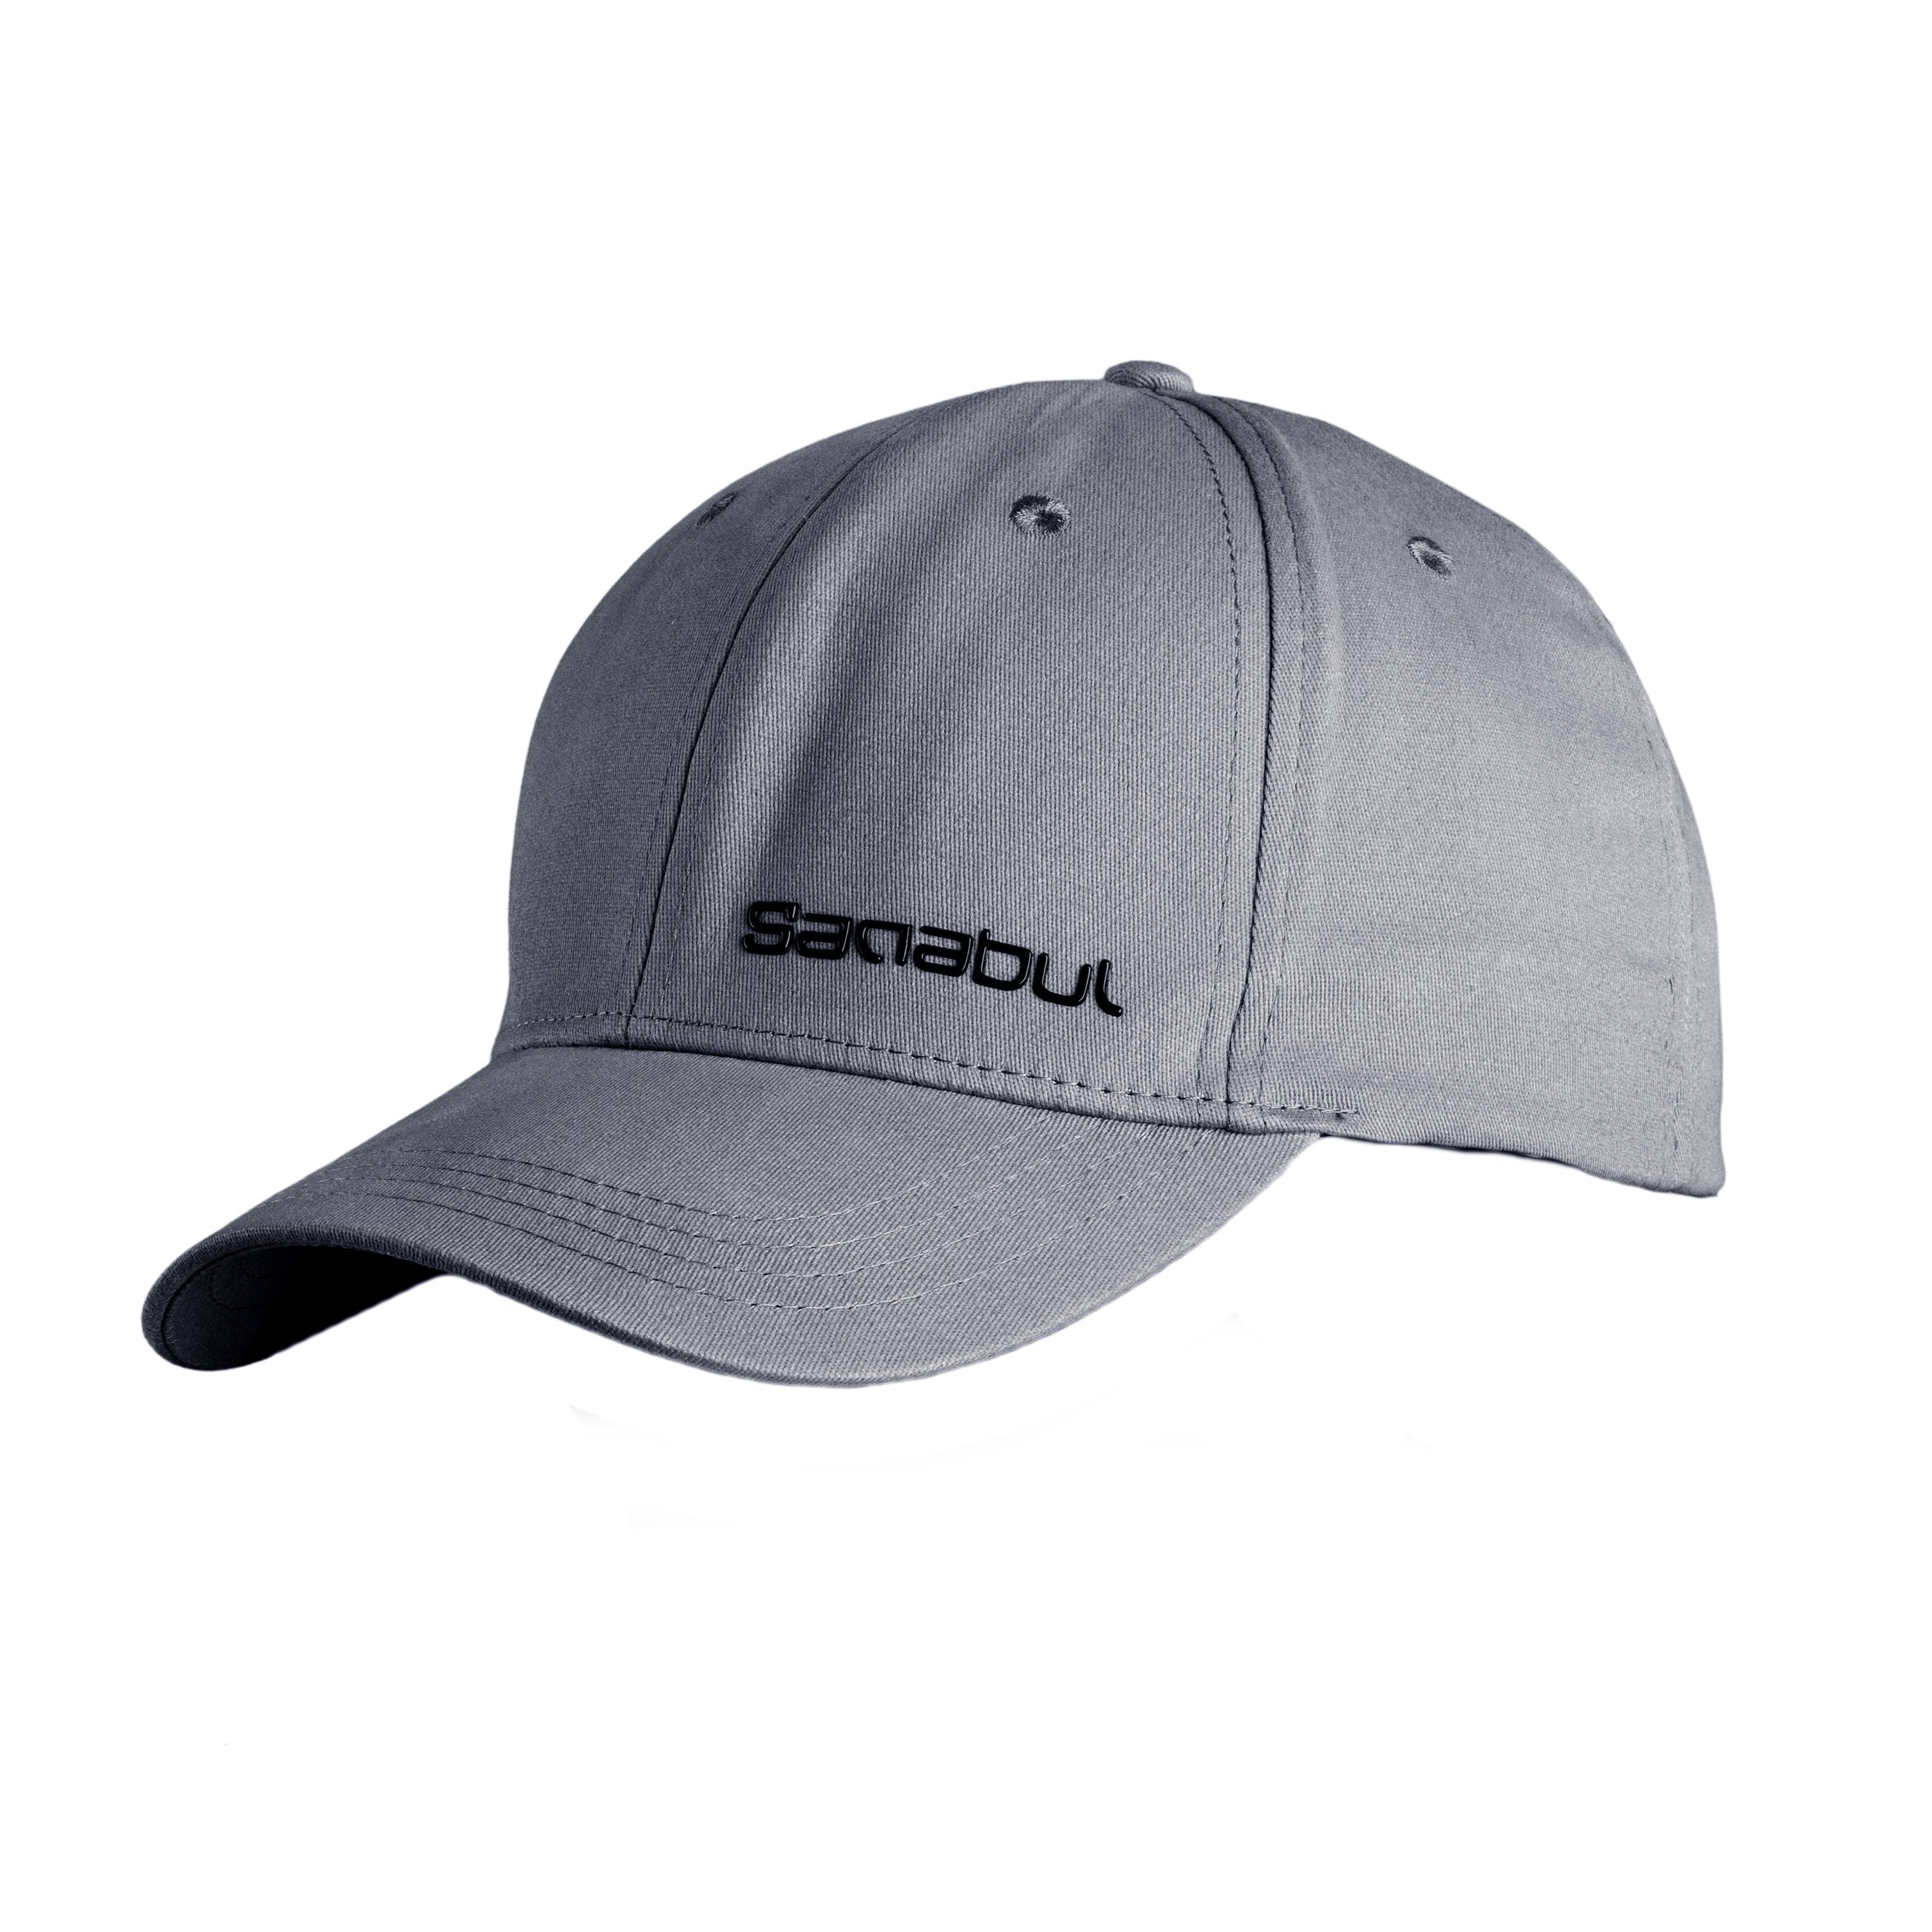 Nobull - Performance Hat - Sand - Size Large/XL